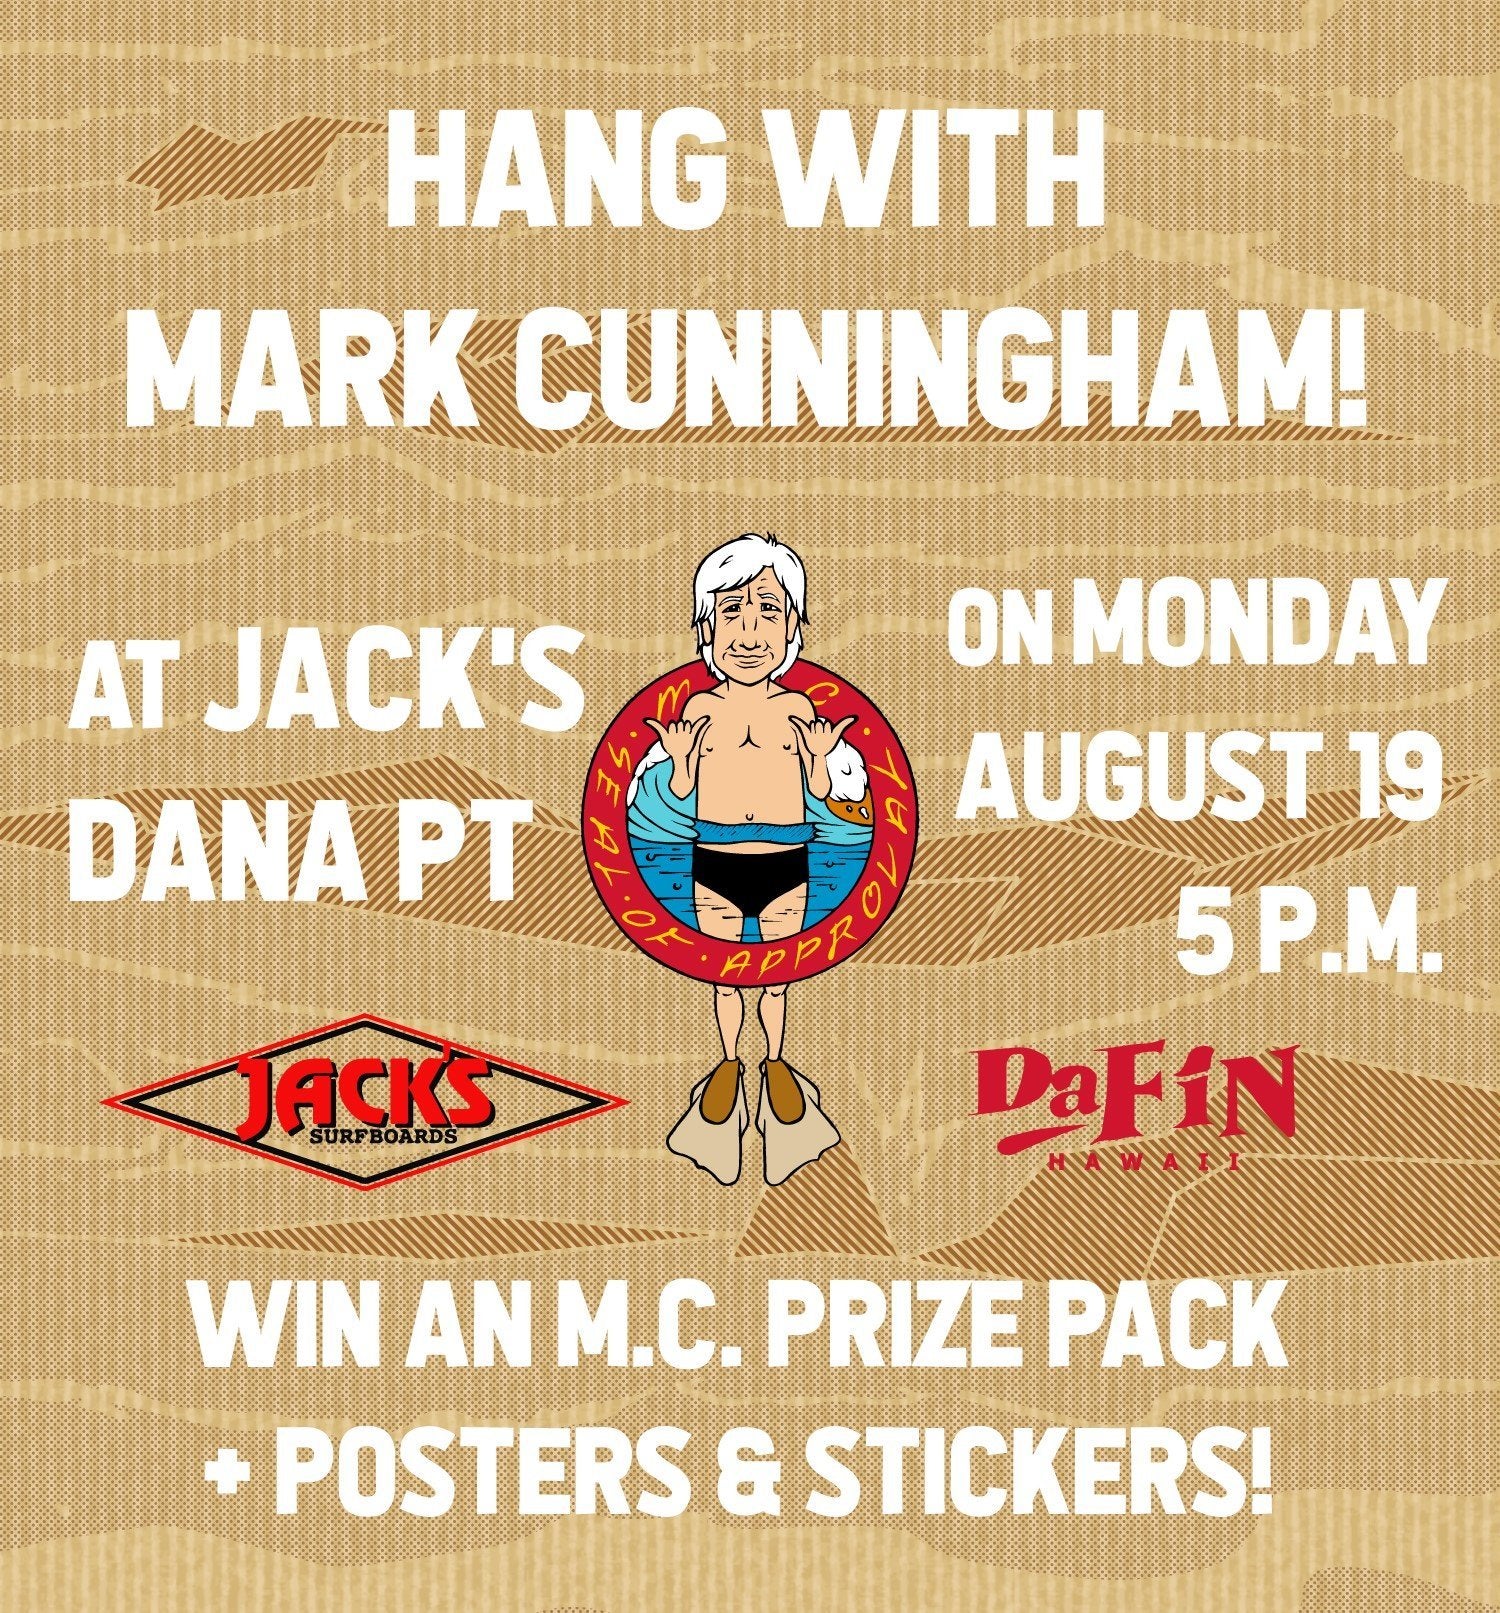 Mark Cunningham@Jack's Dana Point - August 19th | Jack's Surfboards